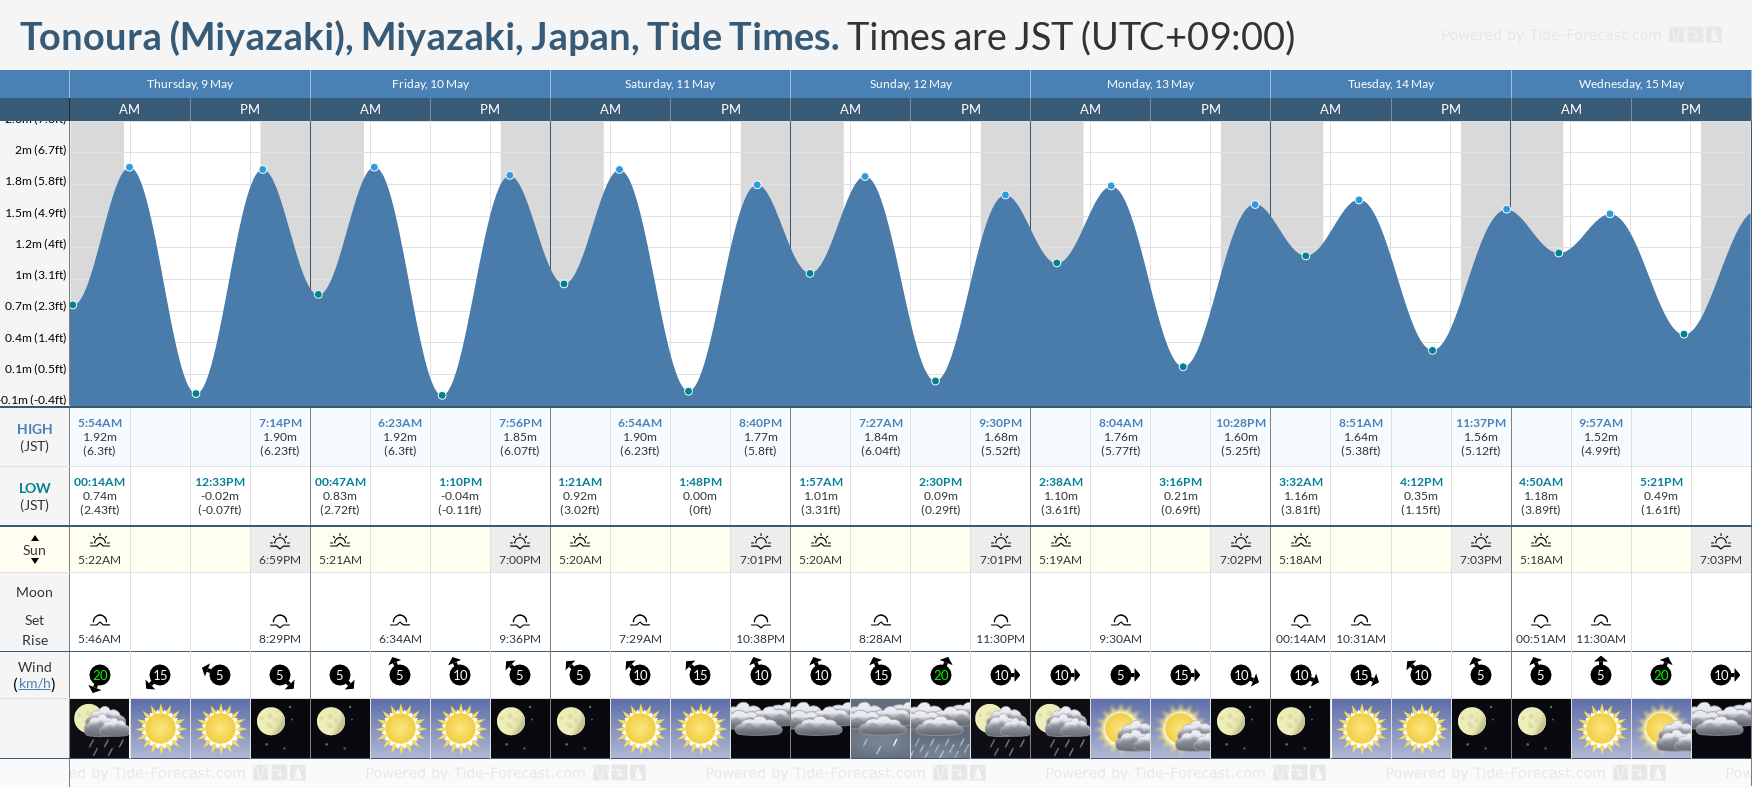 Tonoura (Miyazaki), Miyazaki, Japan Tide Chart including high and low tide tide times for the next 7 days